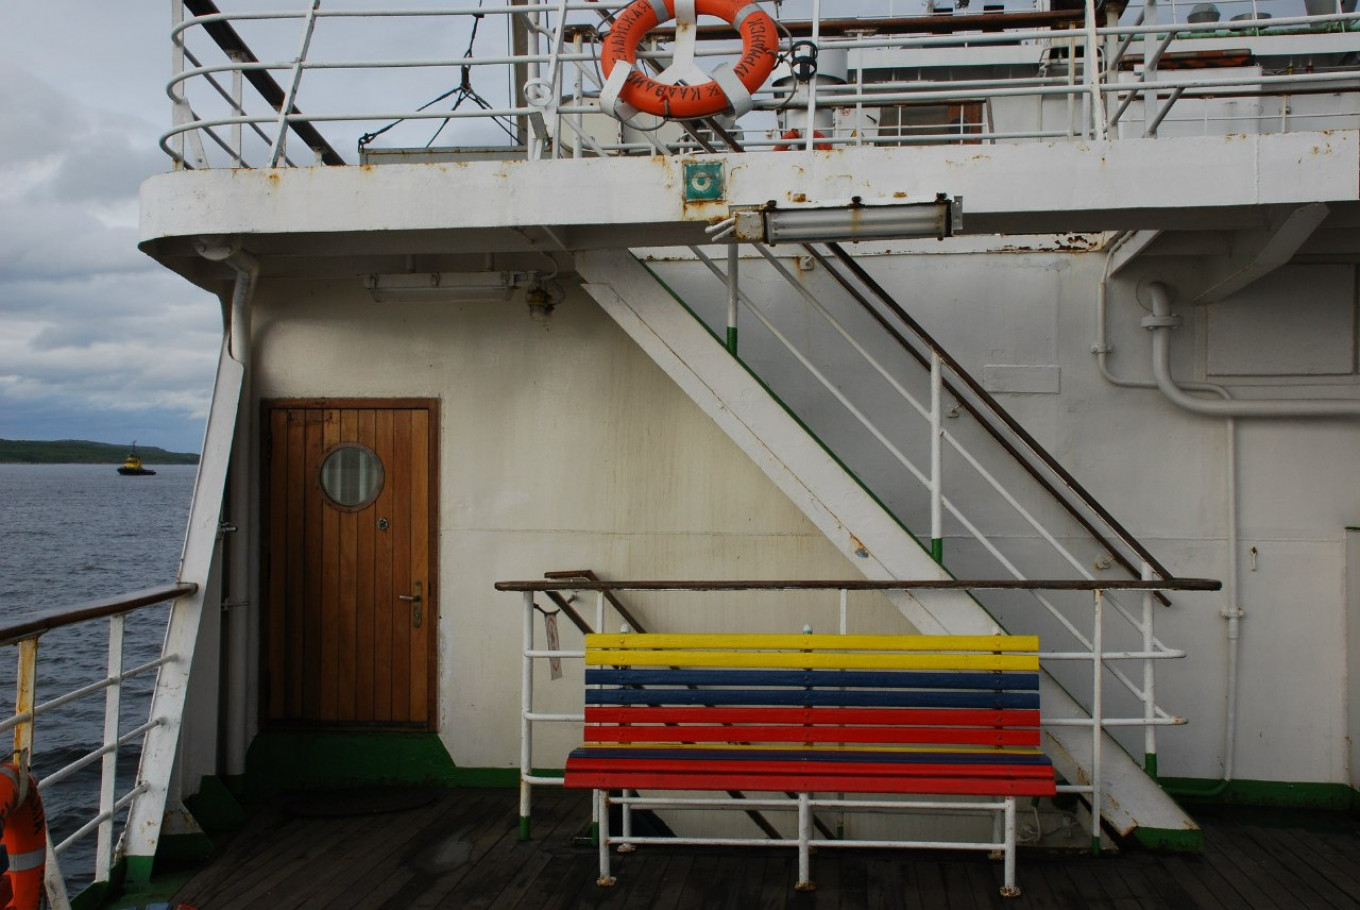 Perusahaan pelayaran Murmansk yang berjuang kehilangan kendali hanya atas jalur penumpang